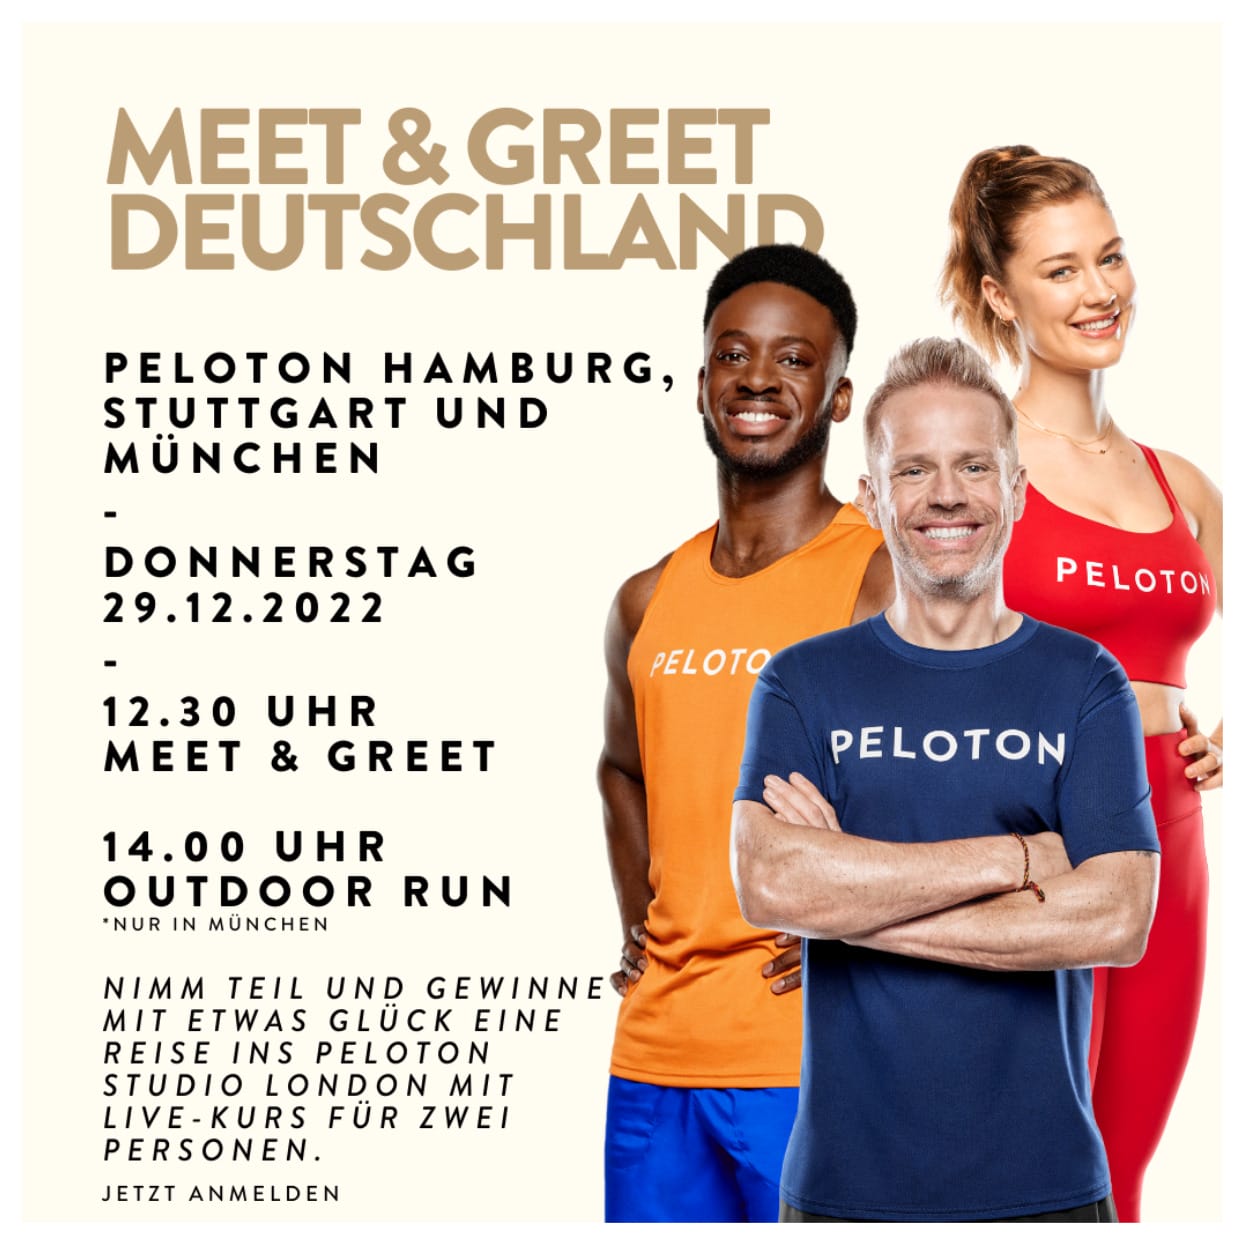 Peloton Germany meet & greet events on December 29, 2022.